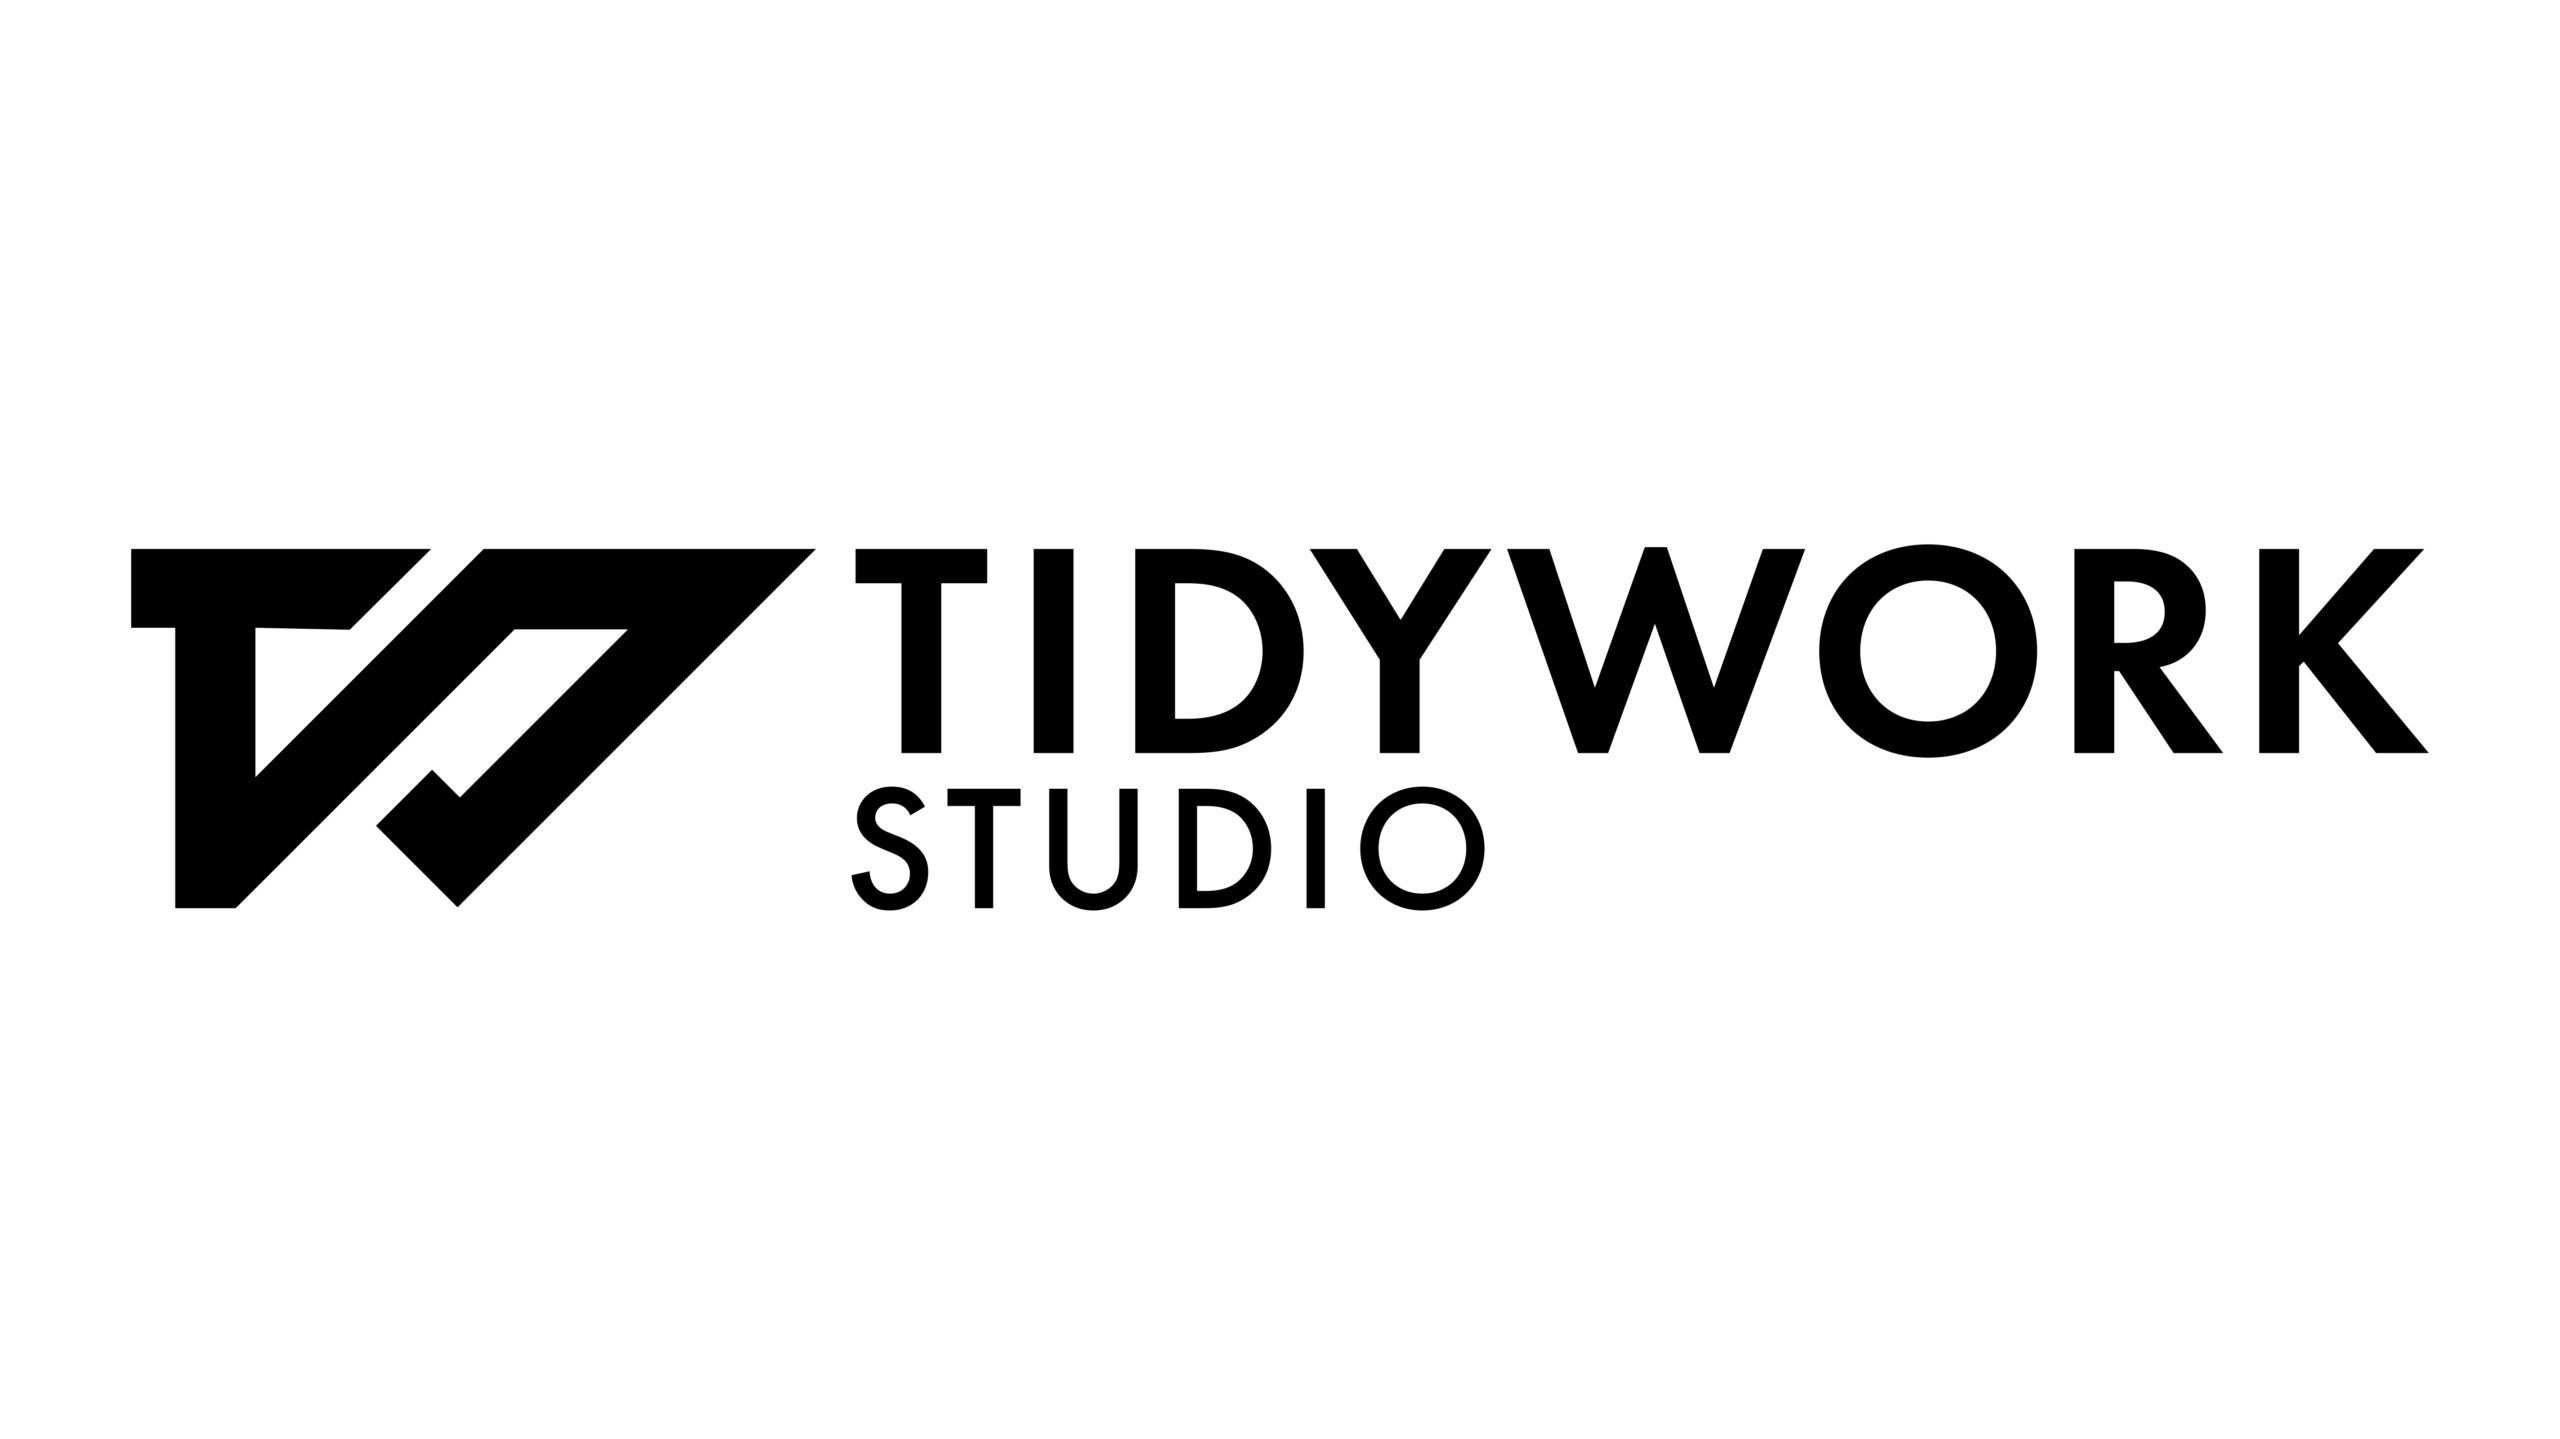 tidywork_studio-logo_outlined